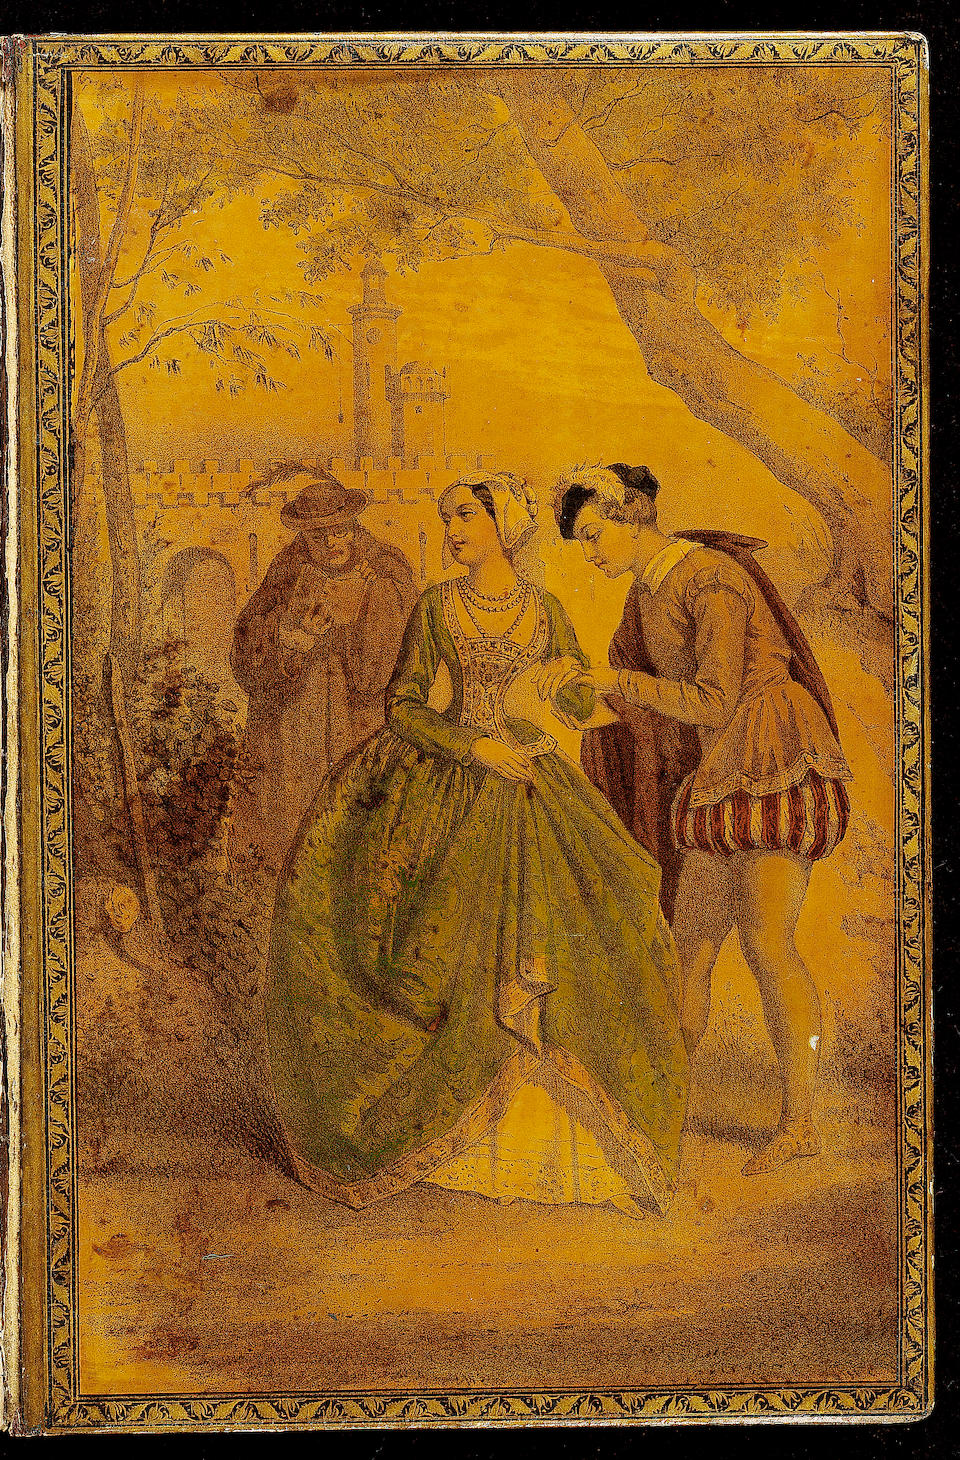 Hakim Manuchehri Damghani, Divan, illuminated manuscript with lacquer binding incorporating photographs of Prince Dust Muhammad Khan, Mu'ayyir al-Mamalik Qajar Persia, dated AH 1294-95/AD 1877-78